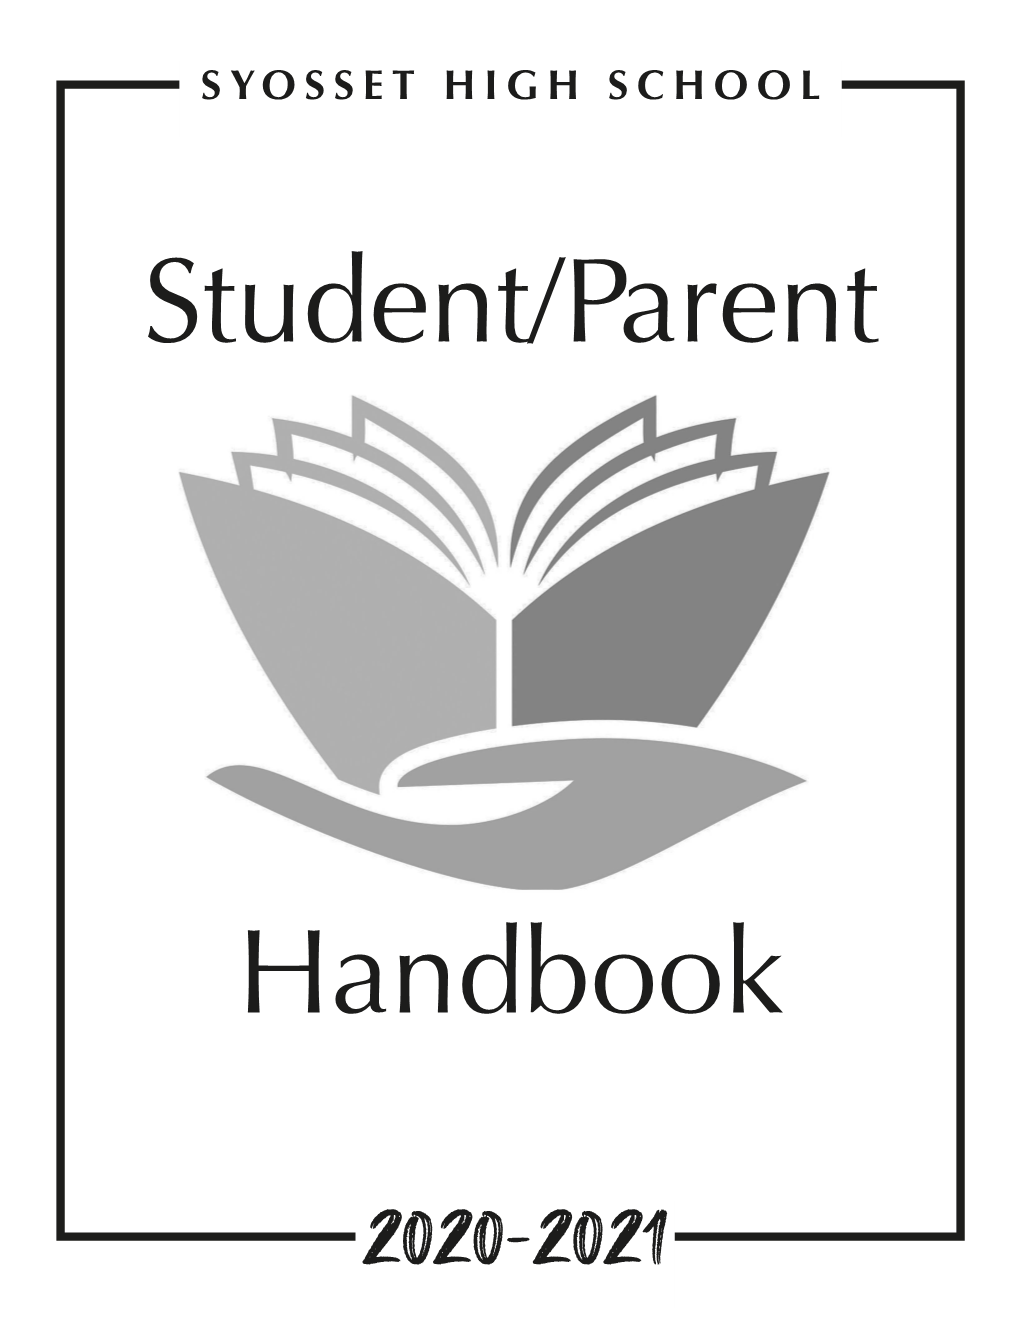 SHS Student/Parent Handbook